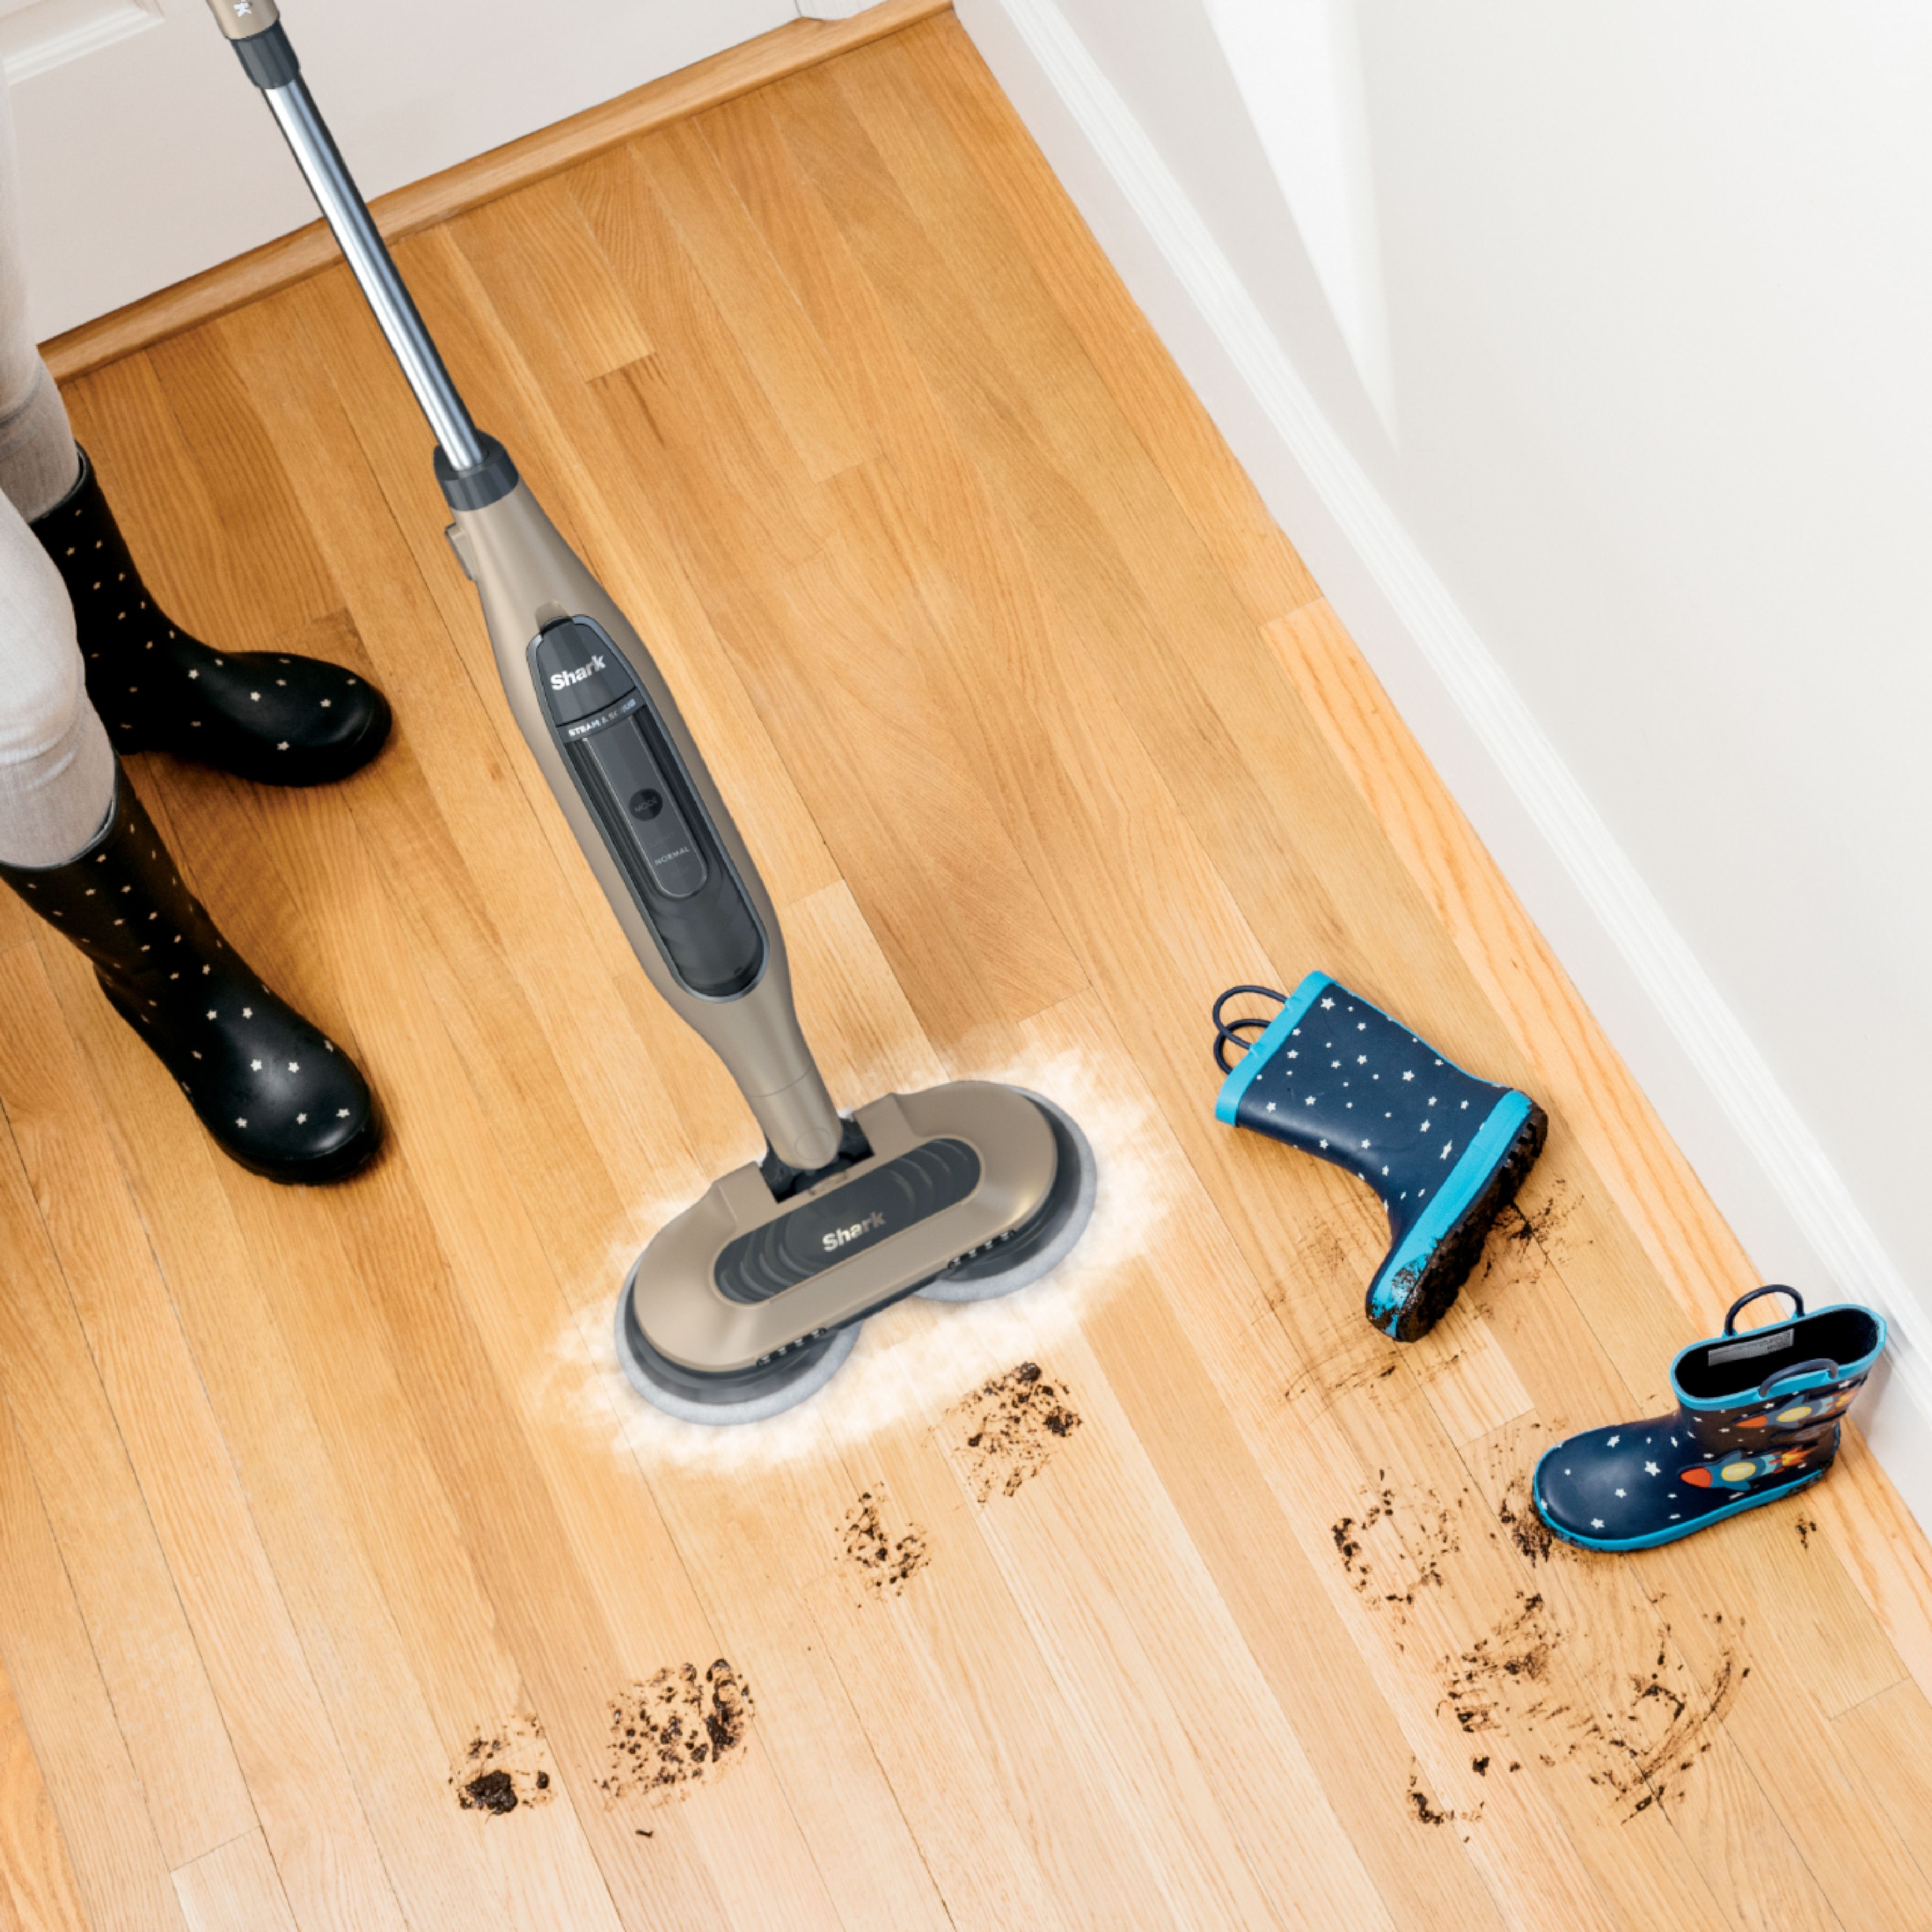 Shark® Steam & Scrub All-in-One Scrubbing and Sanitizing Hard Floor Steam  Mop S7020